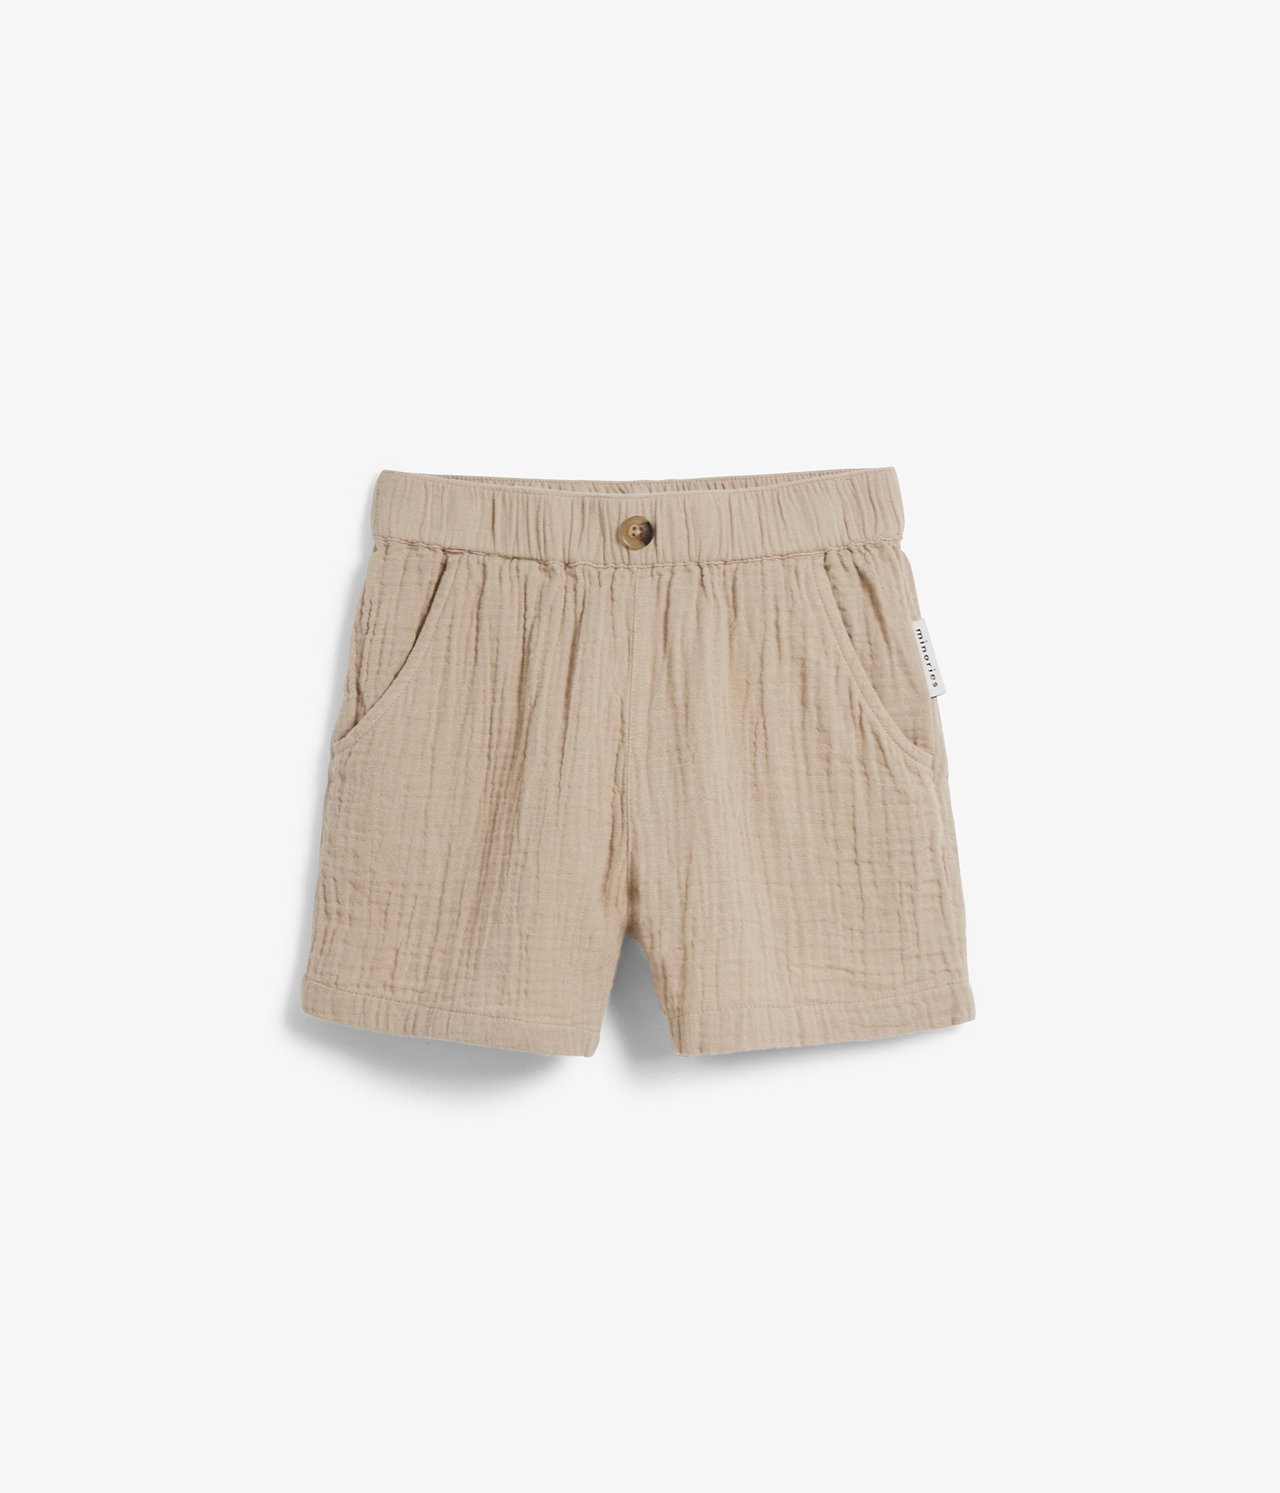 Vevd shorts Brun - null - 1